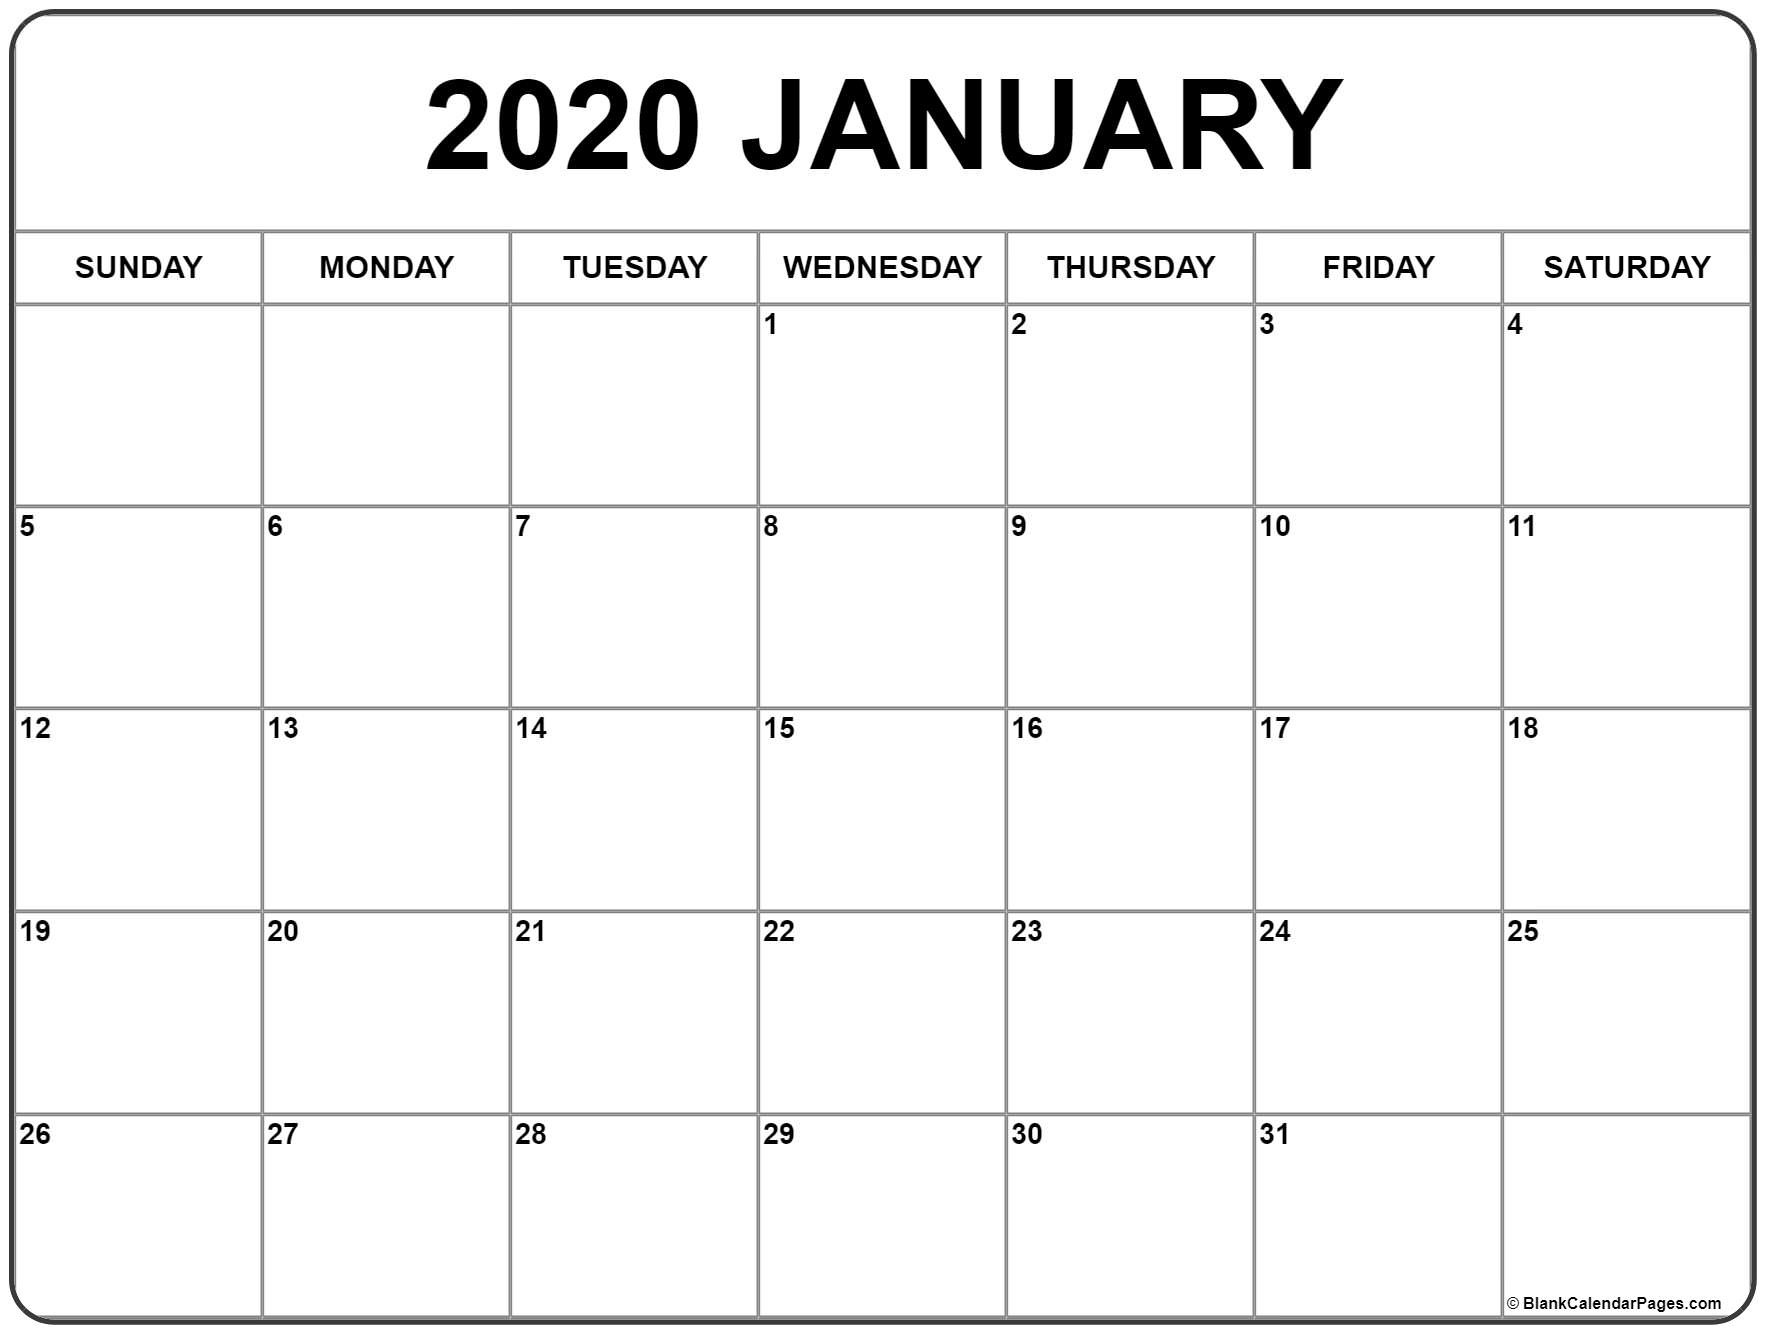 January 2020 Calendar | Free Printable Monthly Calendars-January 2020 Calendar To Print